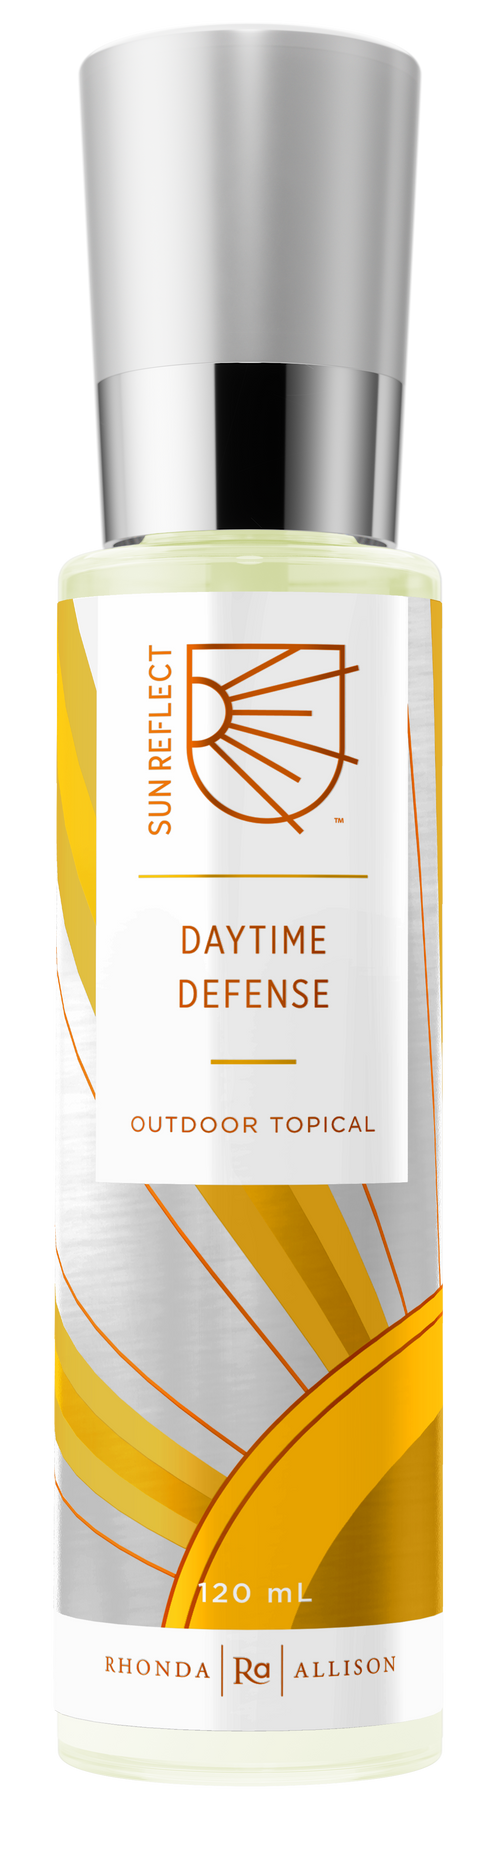 Daytime Defense SPF30